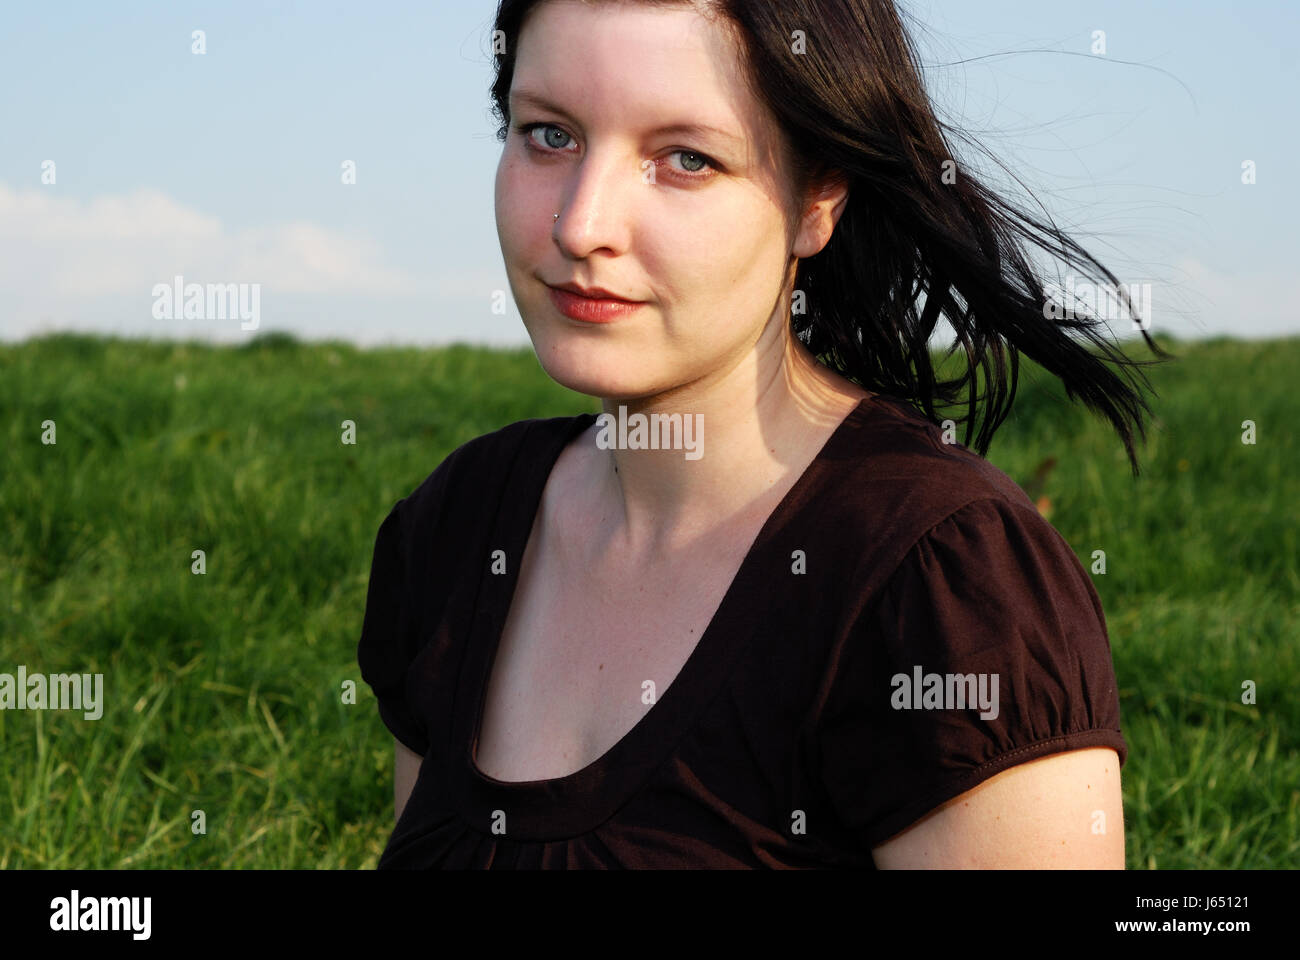 outdoor portrait Stock Photo